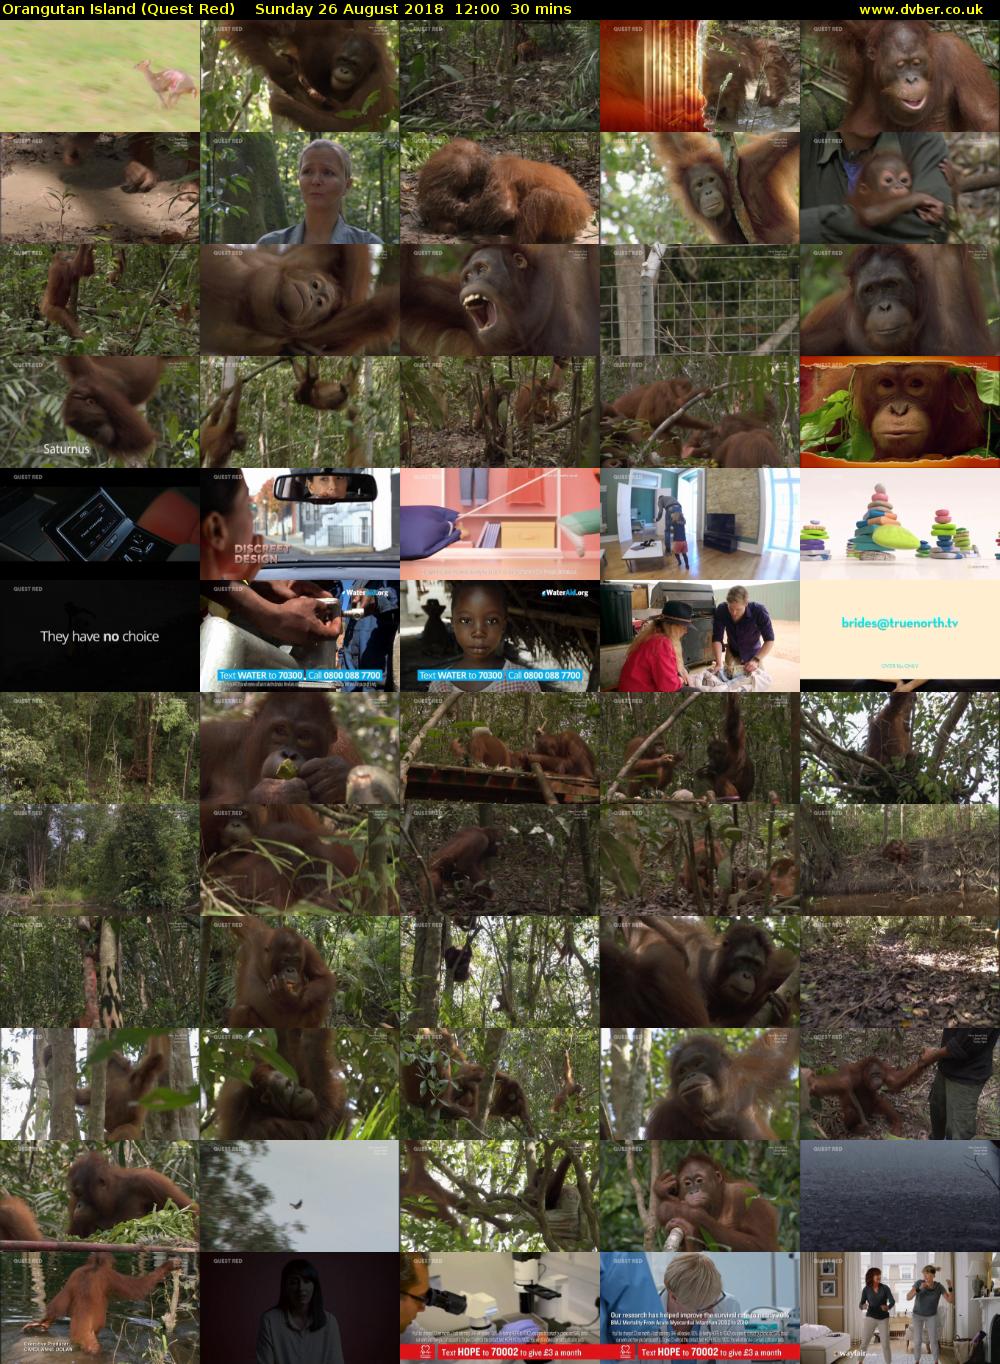 Orangutan Island (Quest Red) Sunday 26 August 2018 12:00 - 12:30